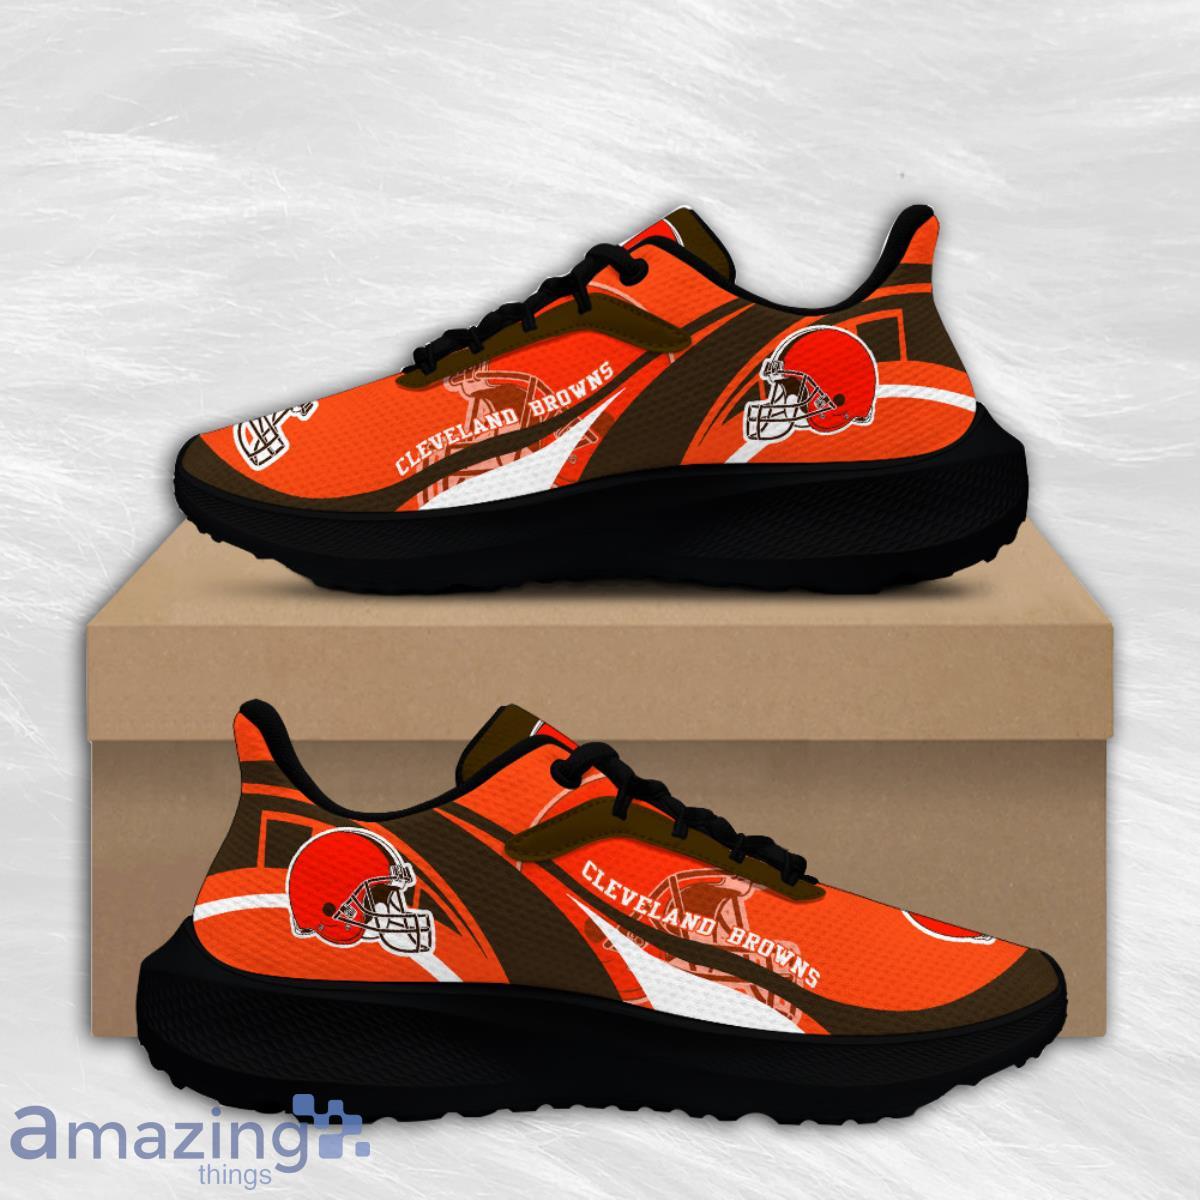 LV Trainers Orange Mesh - The Shoe Box